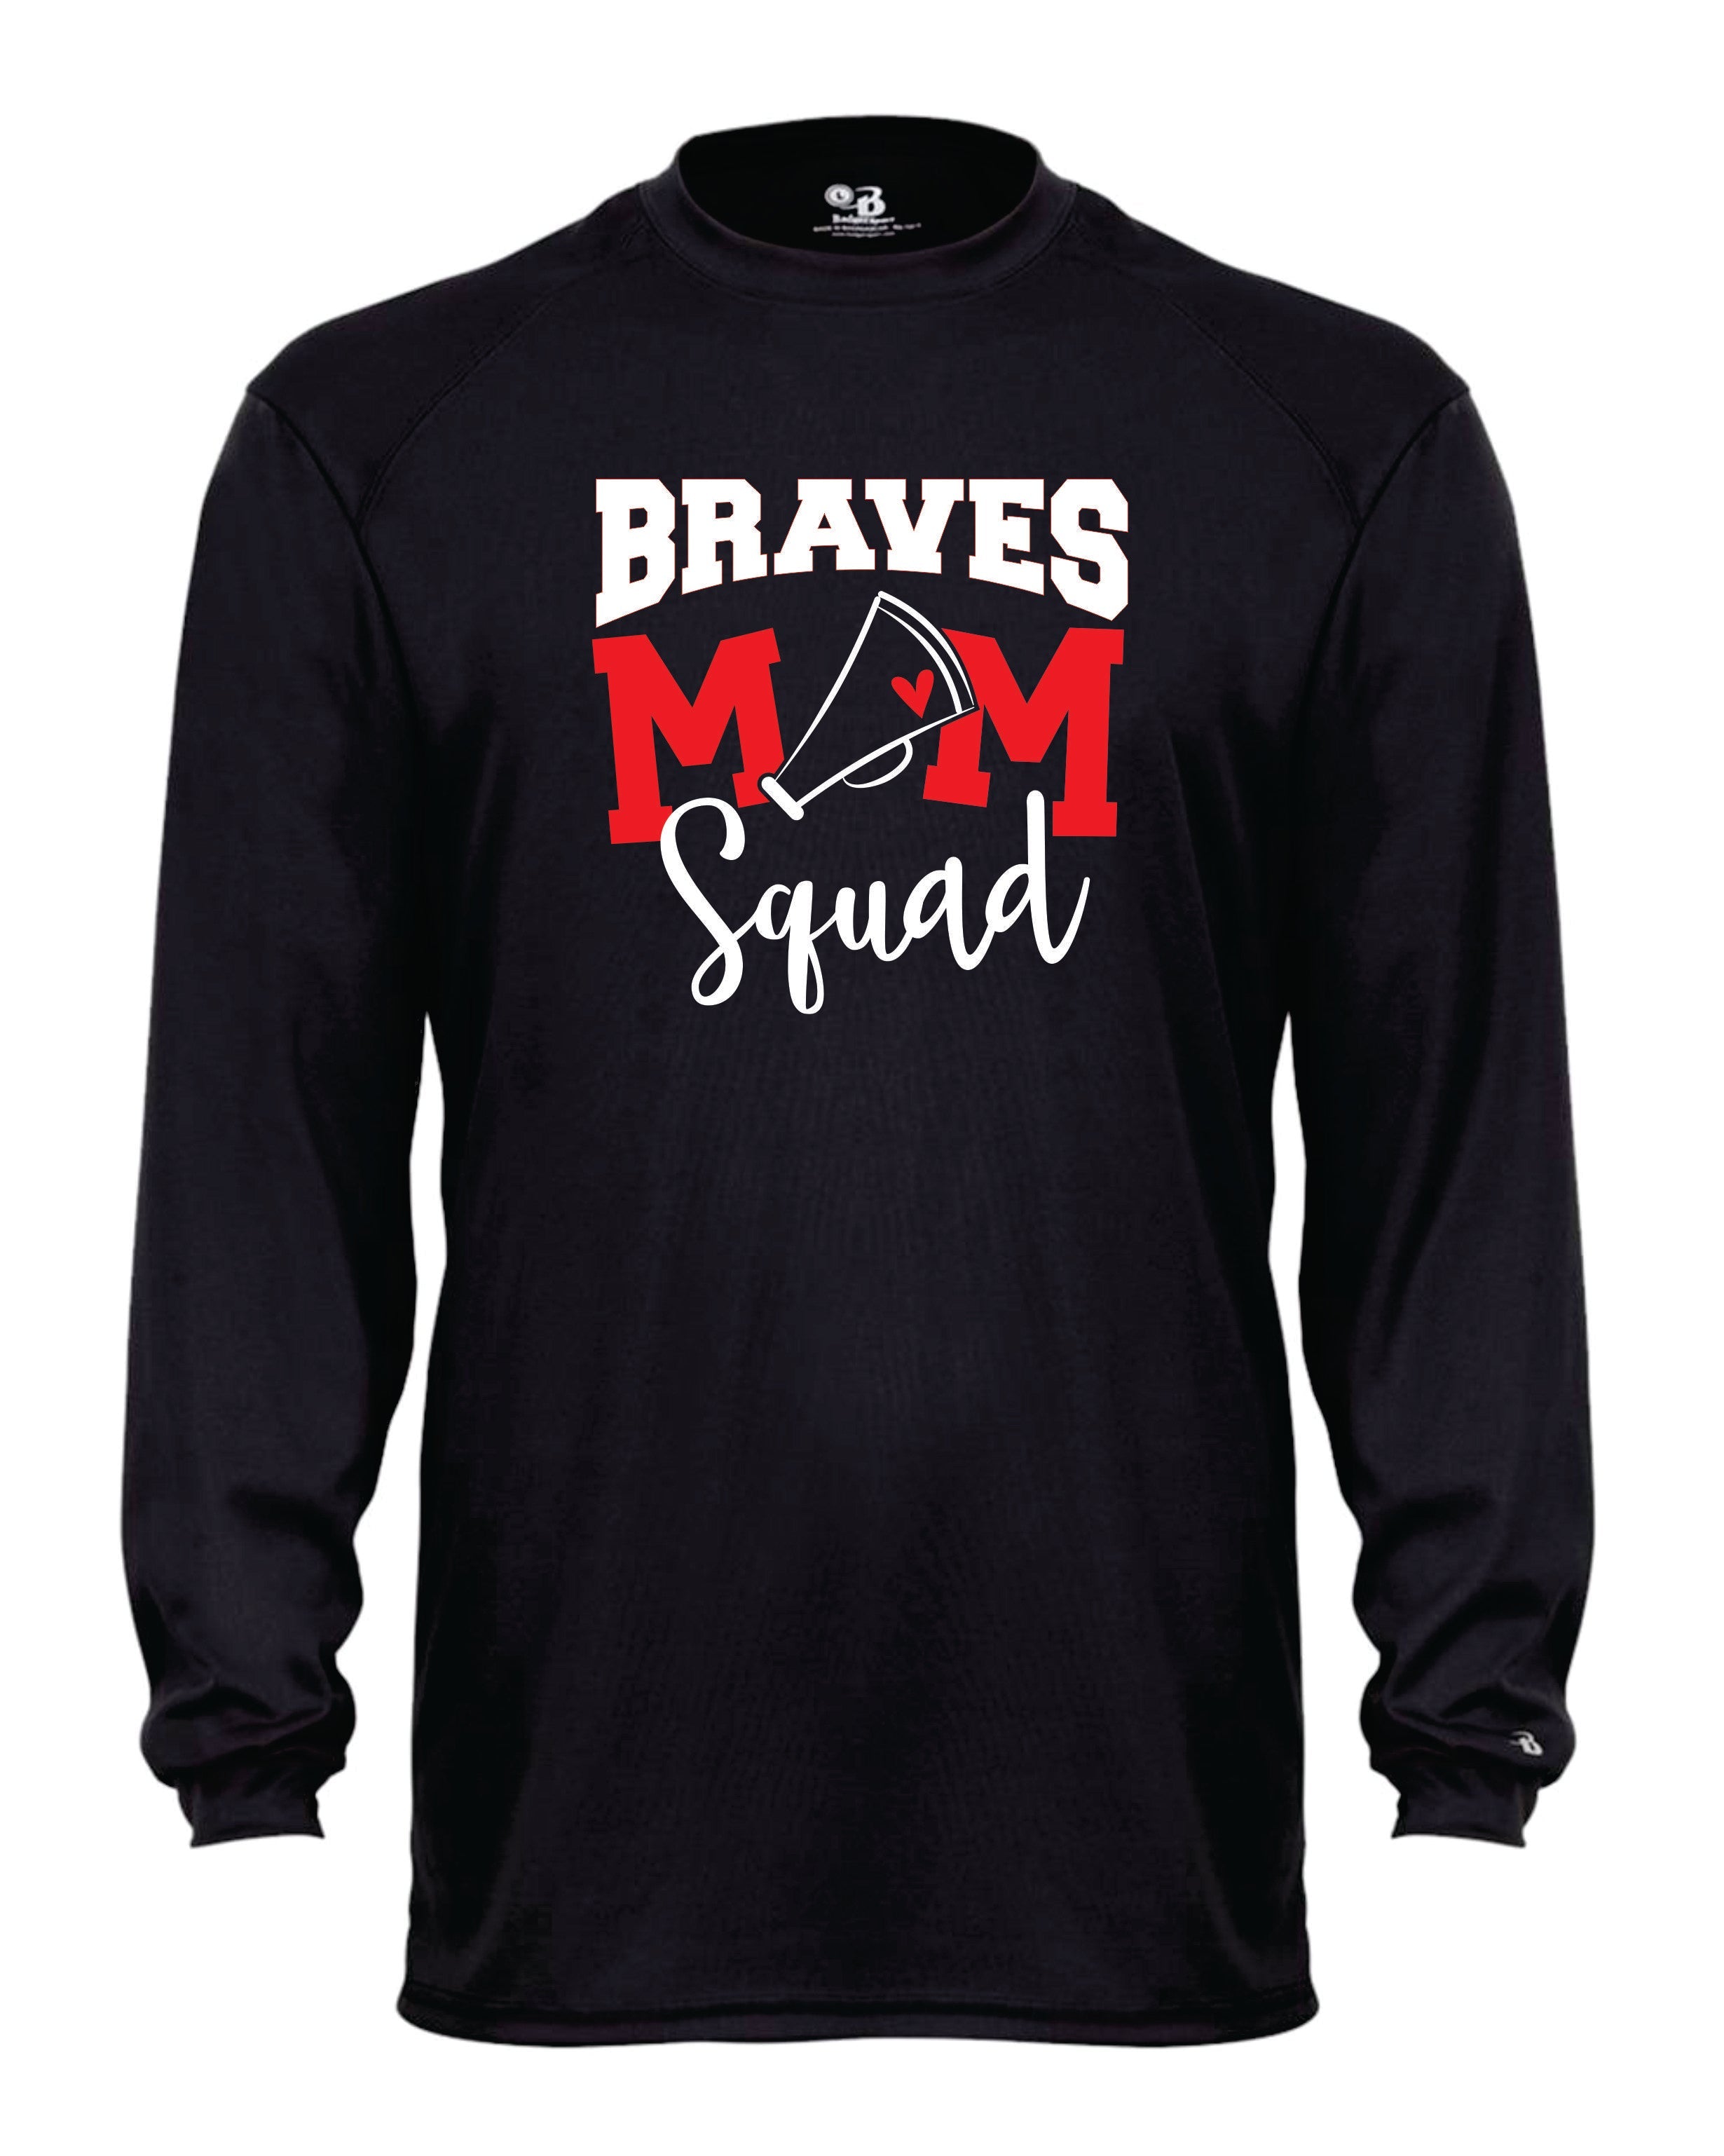 Mechanicsville Braves Long Sleeve Badger Dri Fit WOMEN Shirt-CHEER MOM SQUAD